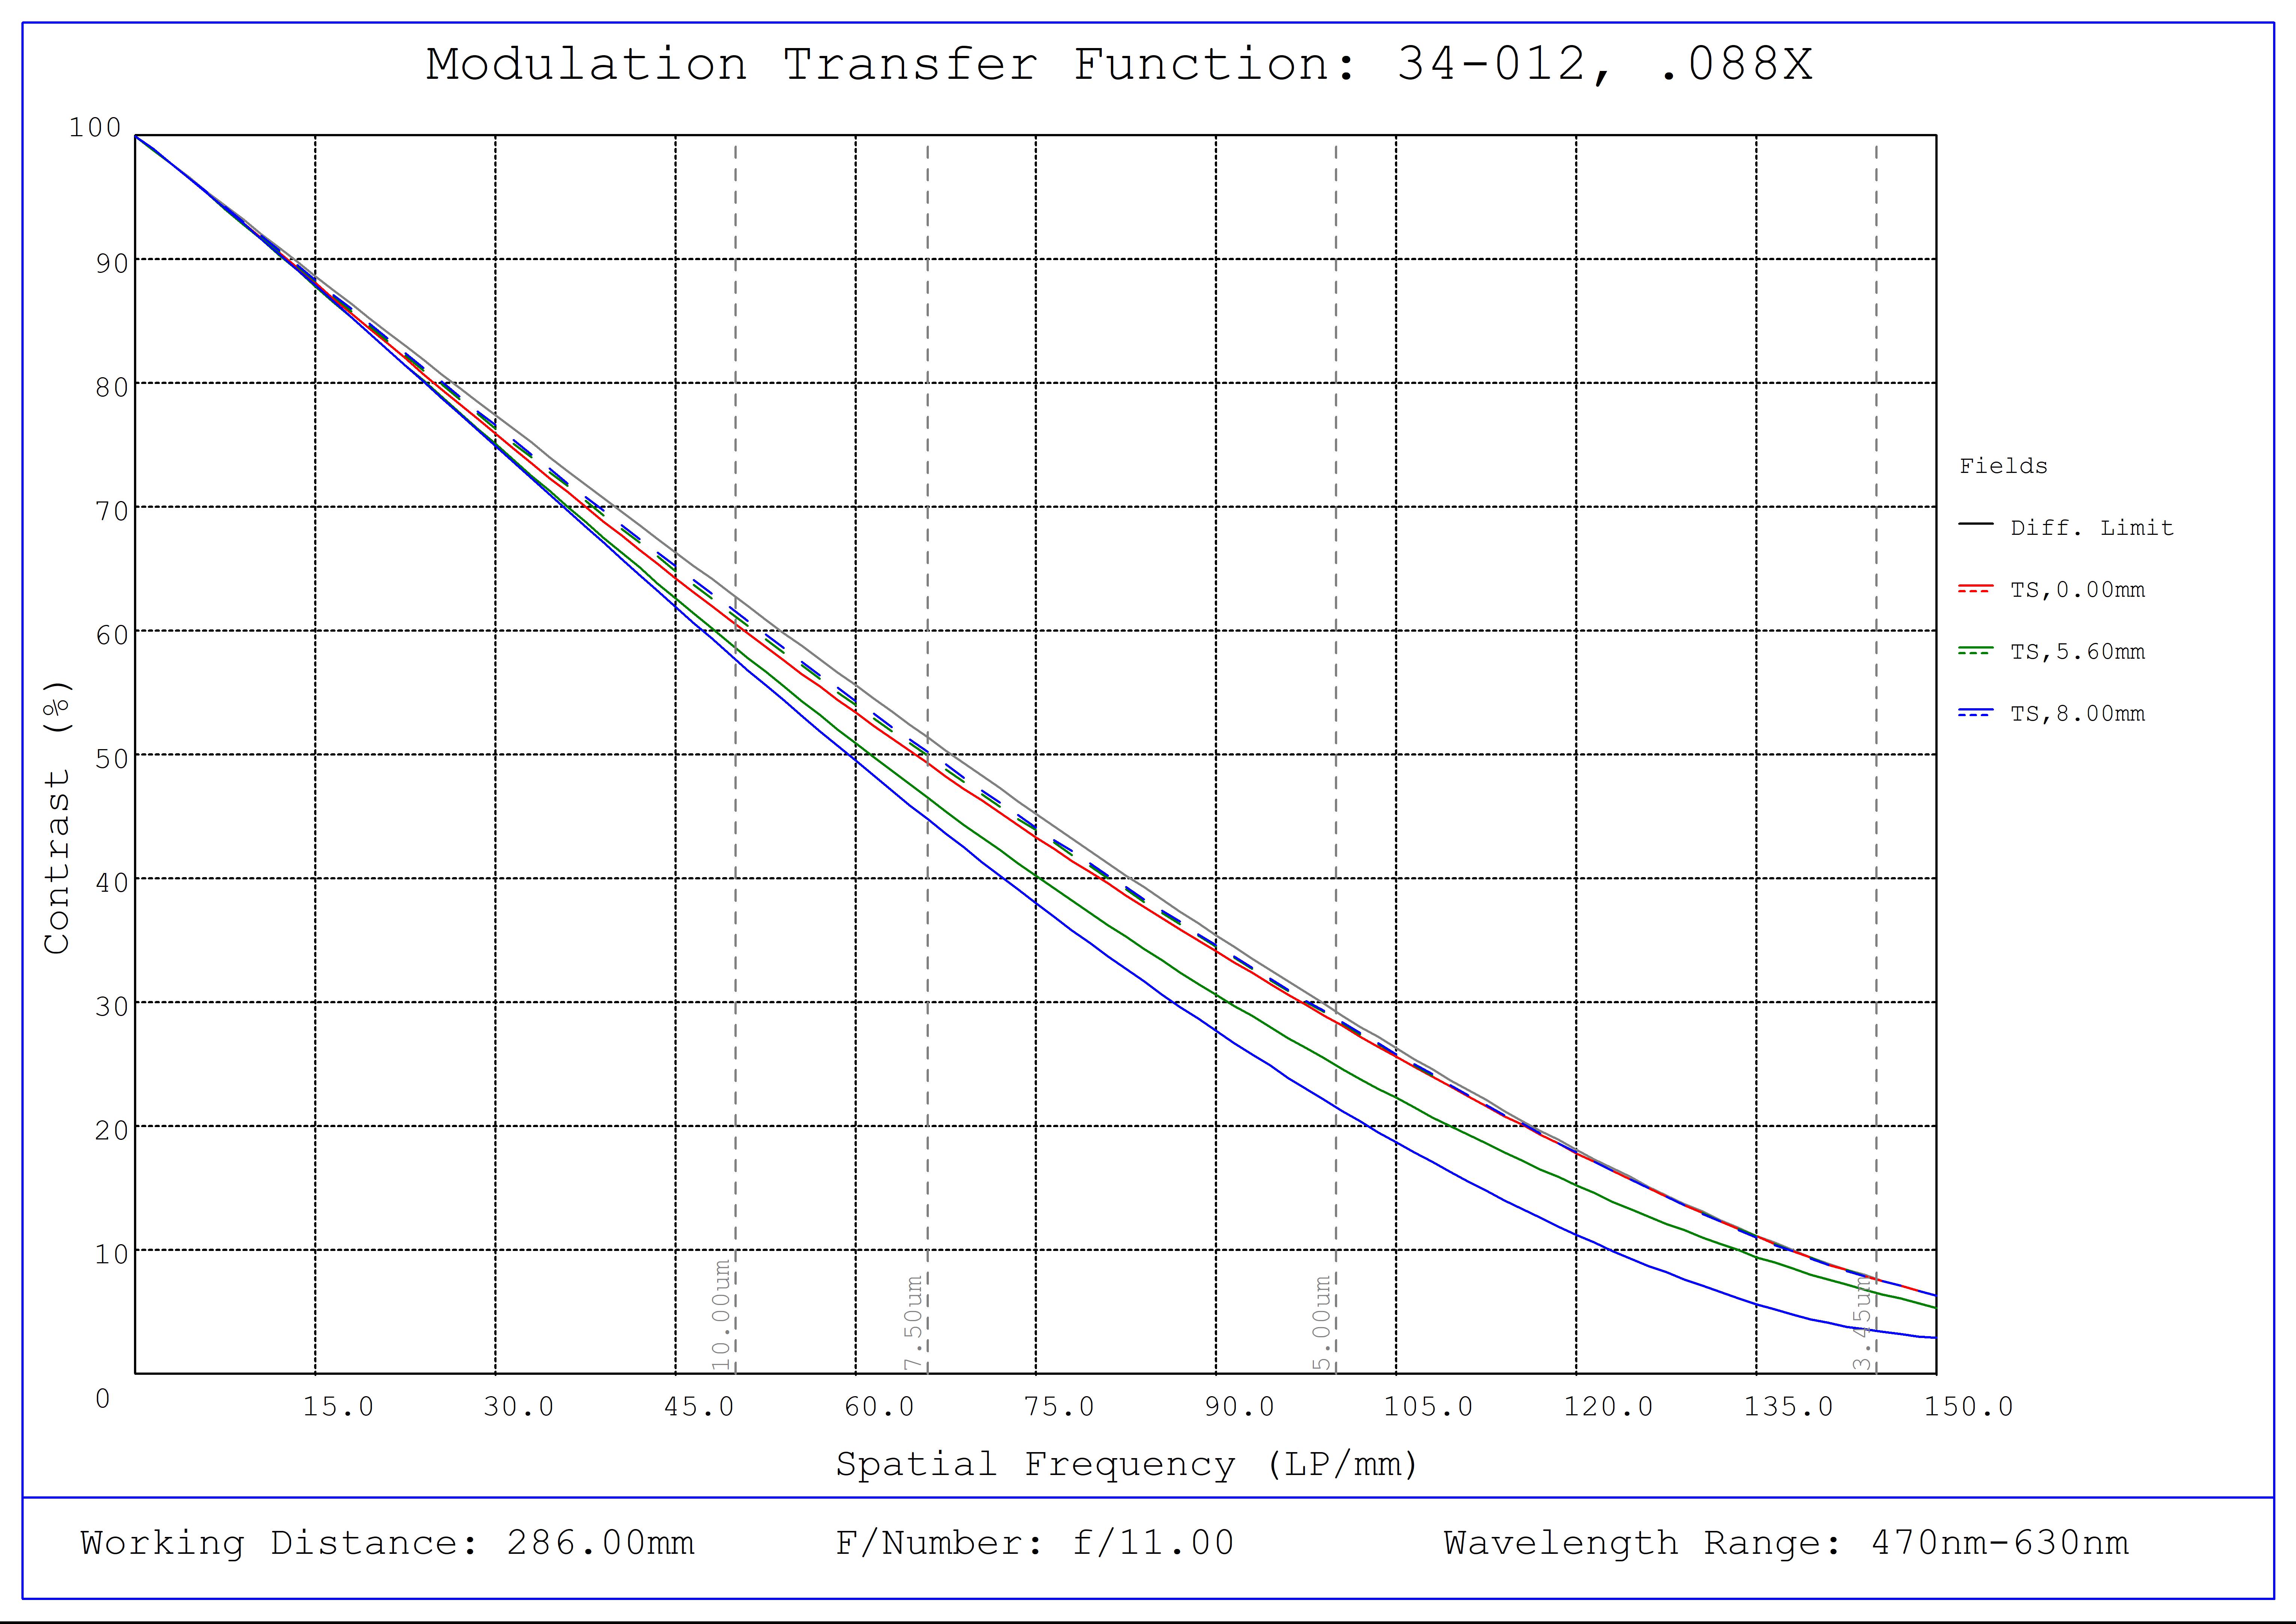 #34-012, 0.088X, 1" C-Mount TitanTL® Telecentric Lens, Modulated Transfer Function (MTF) Plot, 286mm Working Distance, f11